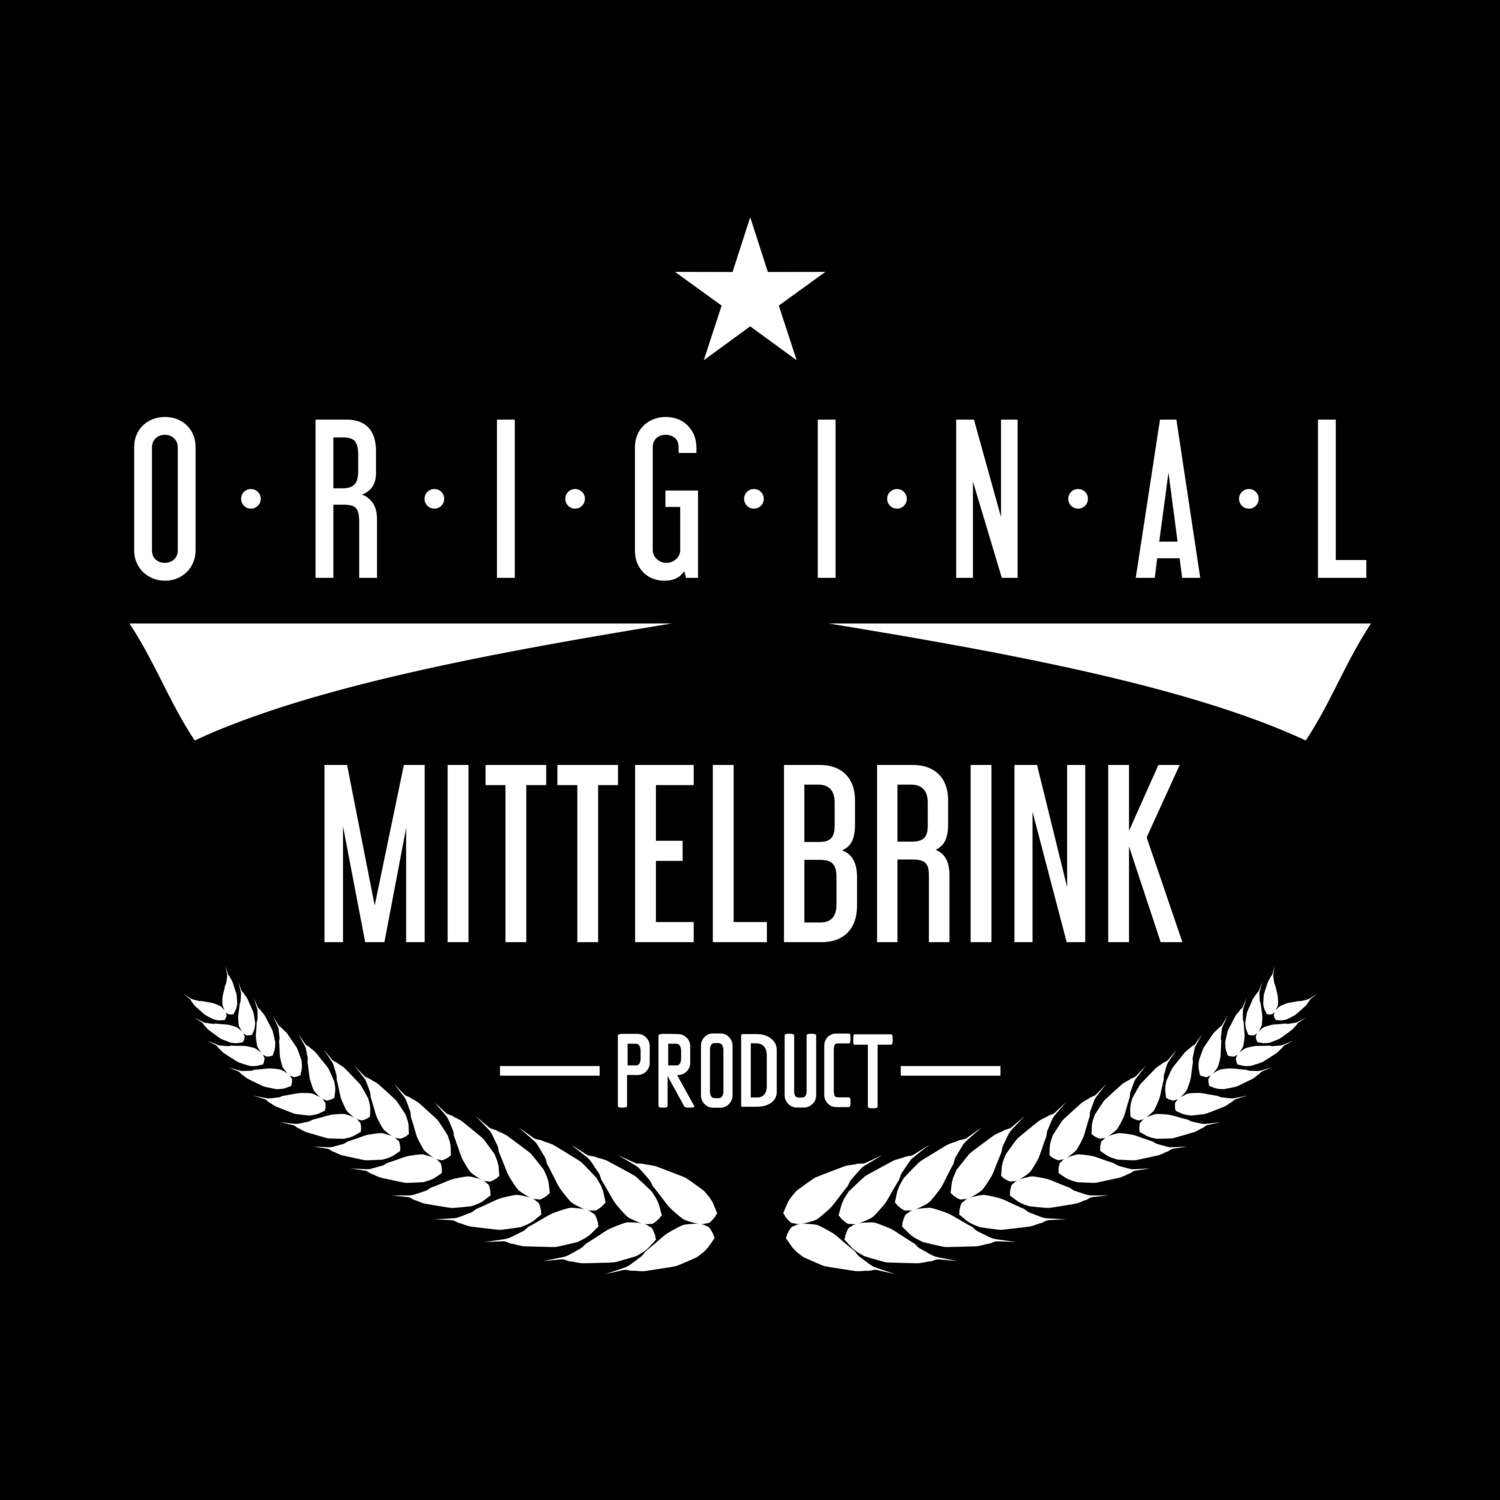 Mittelbrink T-Shirt »Original Product«